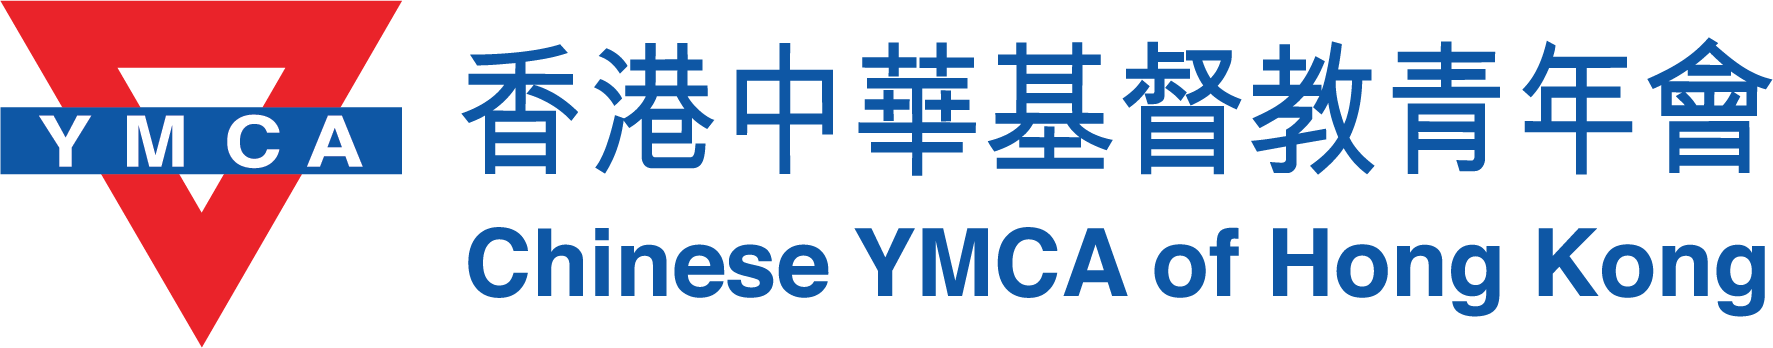 Chinese YMCA of Hong Kong 香港中華基督教青年會